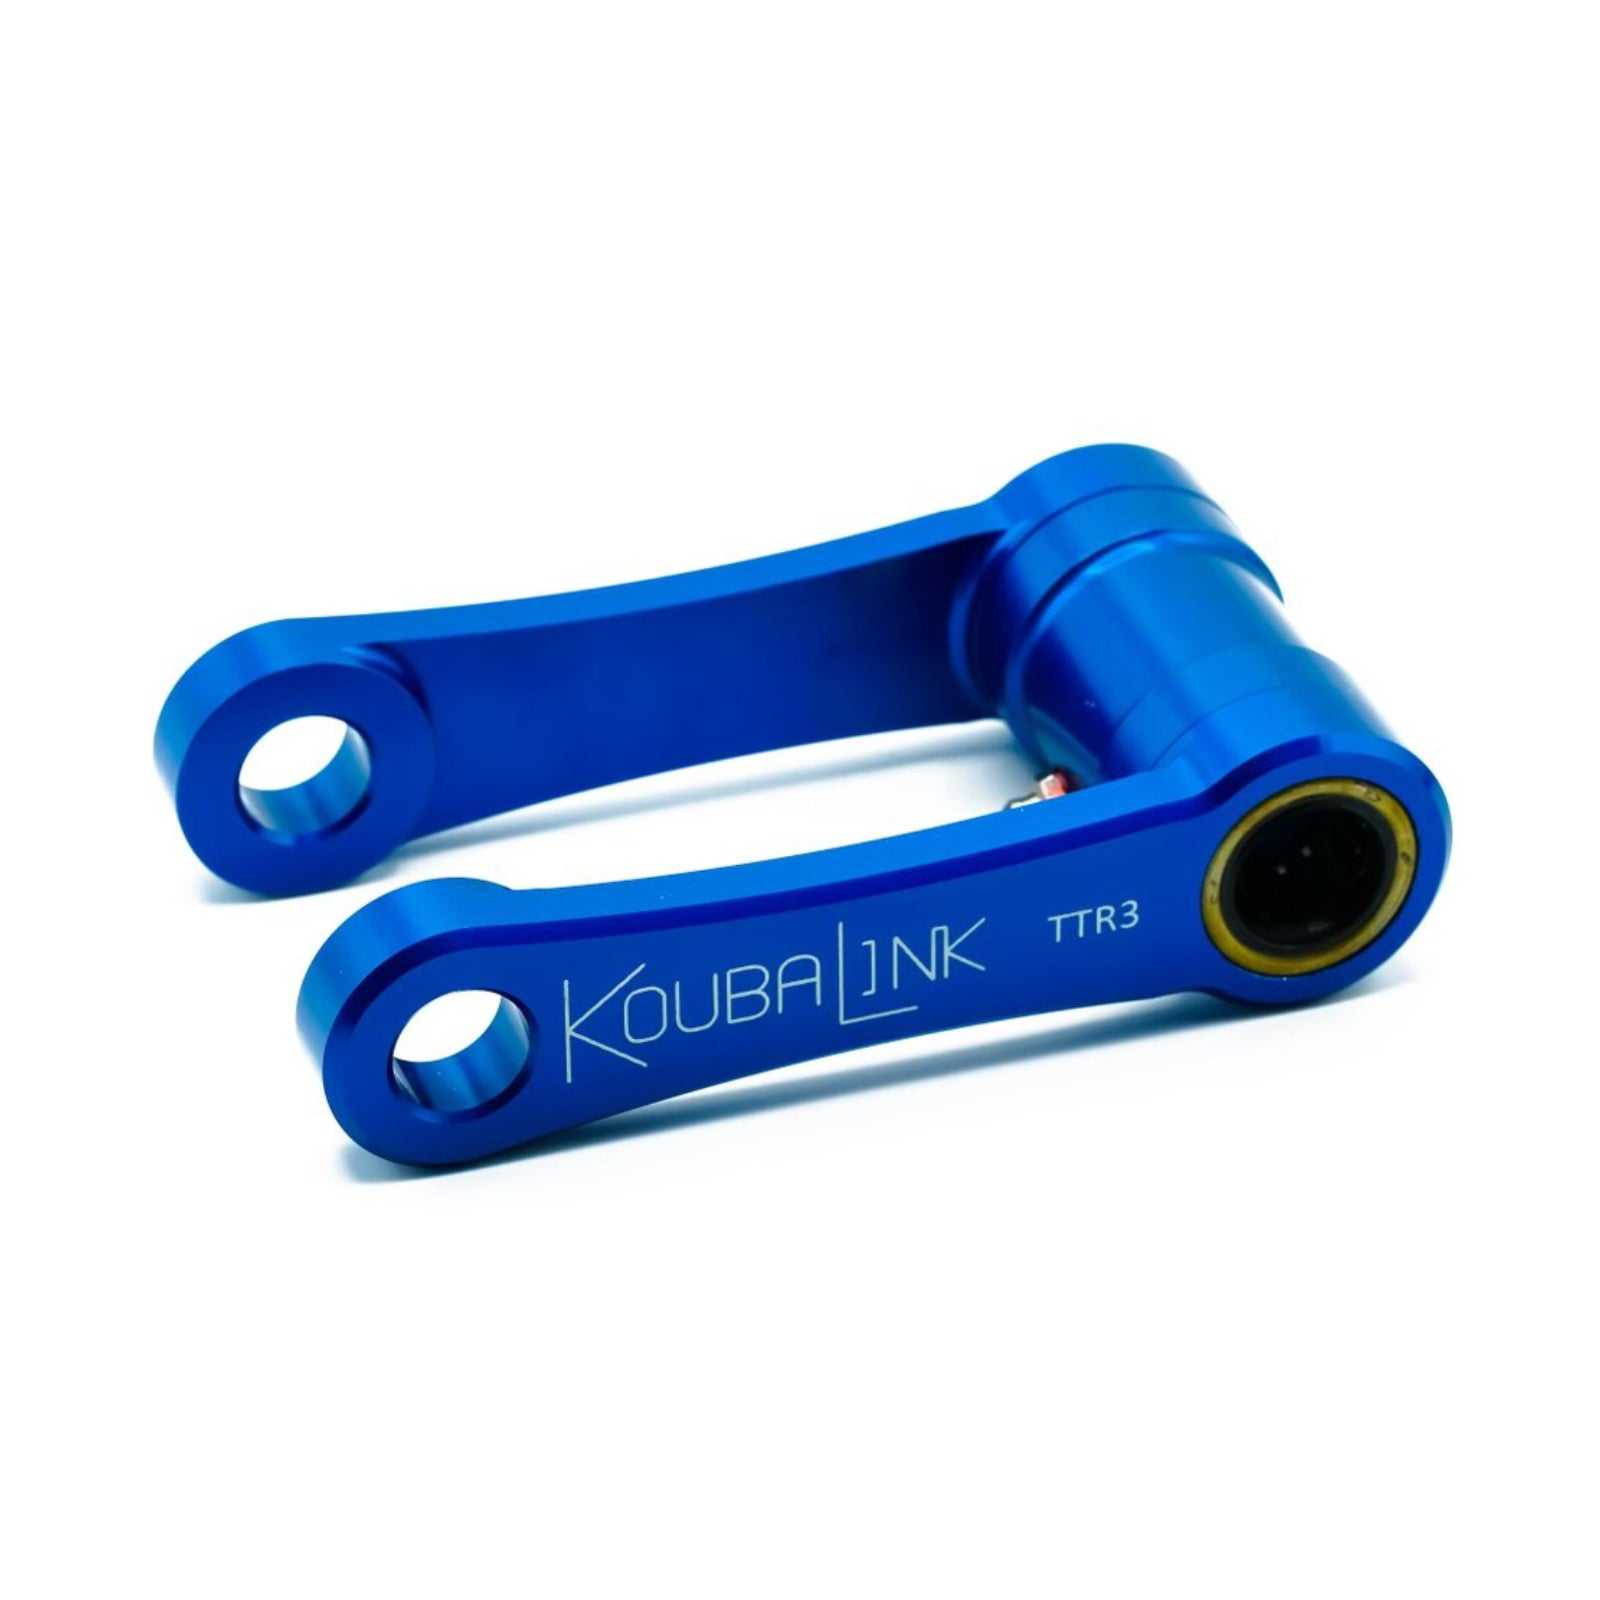 KoubaLink, Koubalink 51 mm Tieferlegungsgestänge TTF3 – Blau